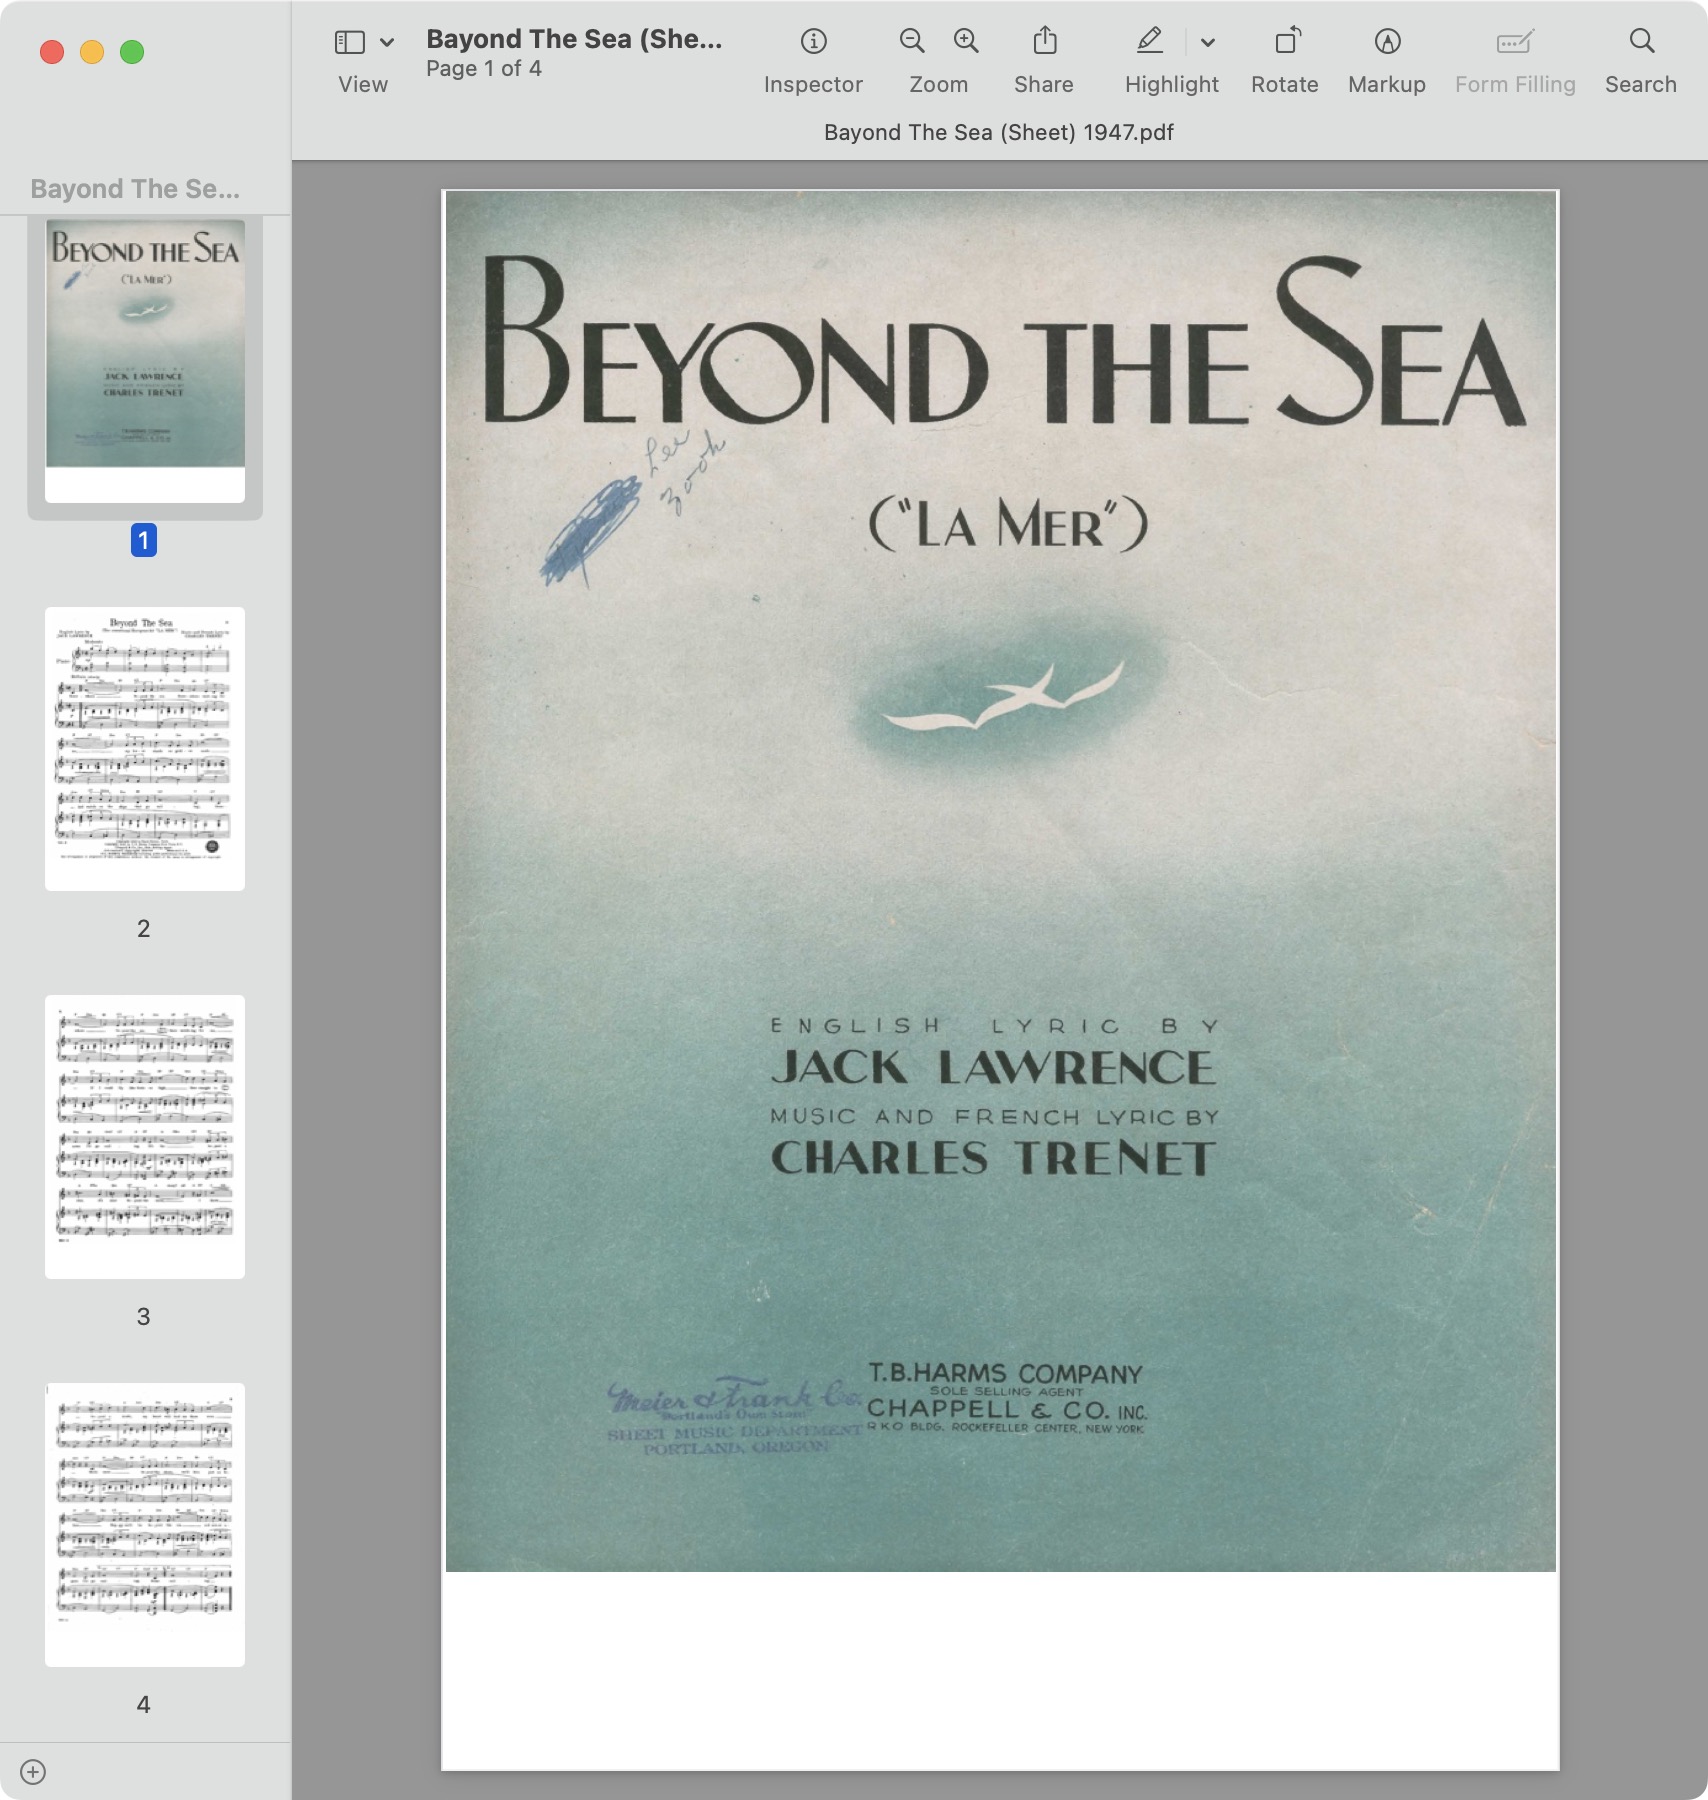 Bayond The Sea (Sheet) 1947.jpg